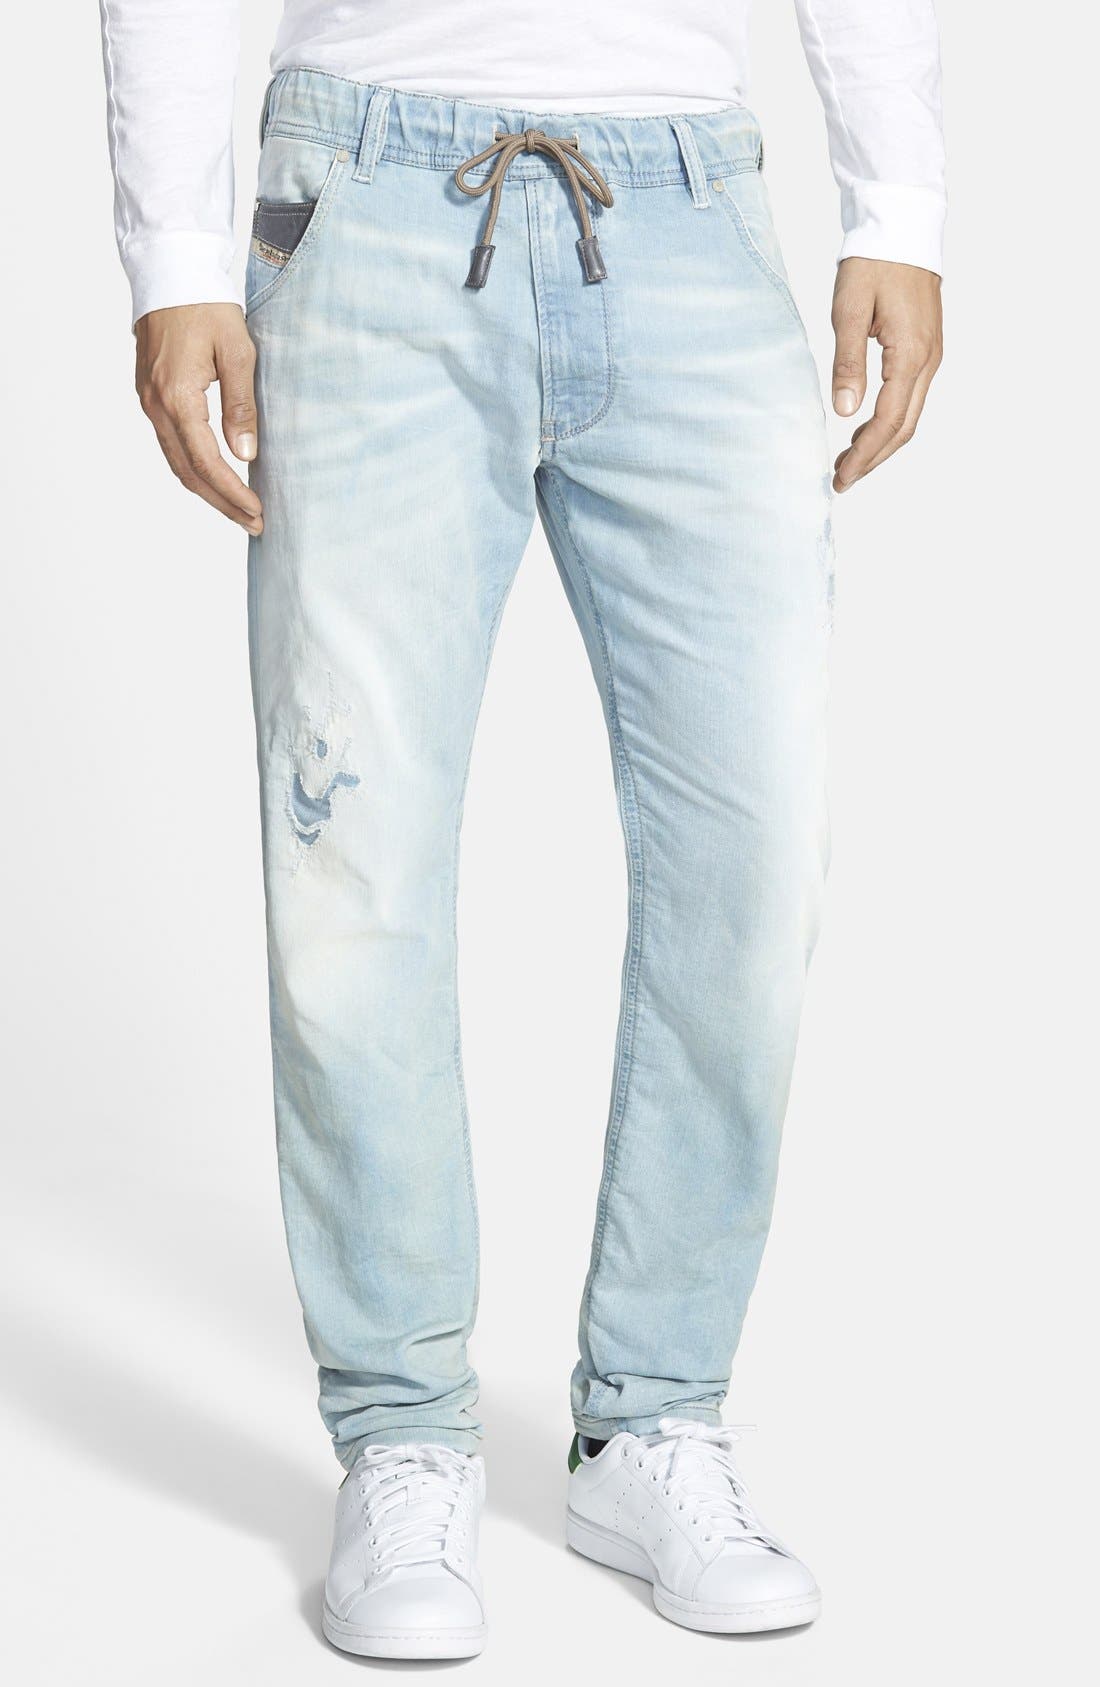 diesel jogg jeans sale